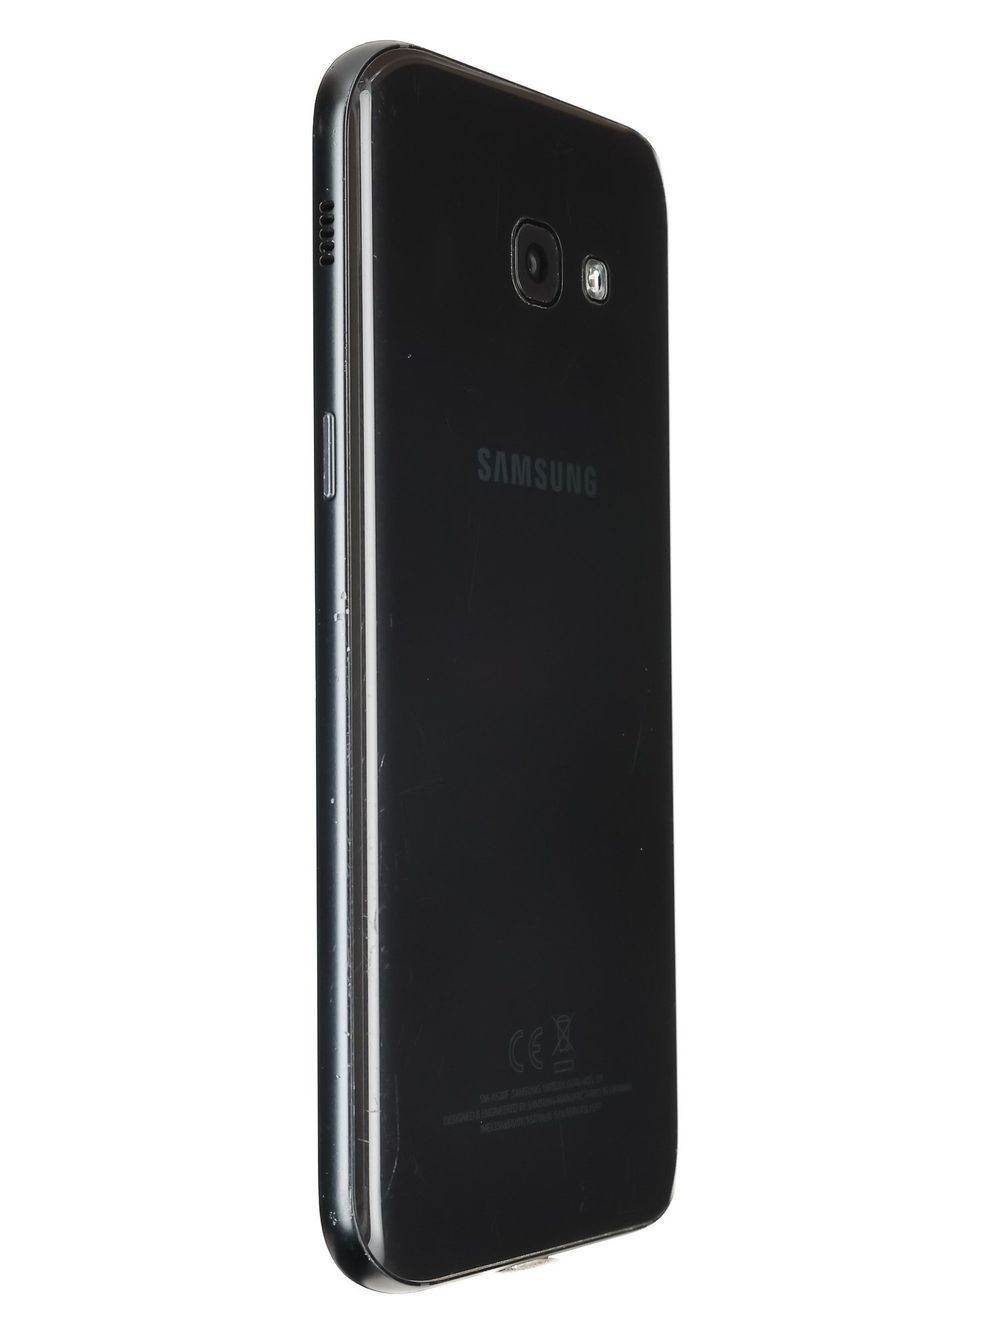 Samsung a5 memoria 32 g